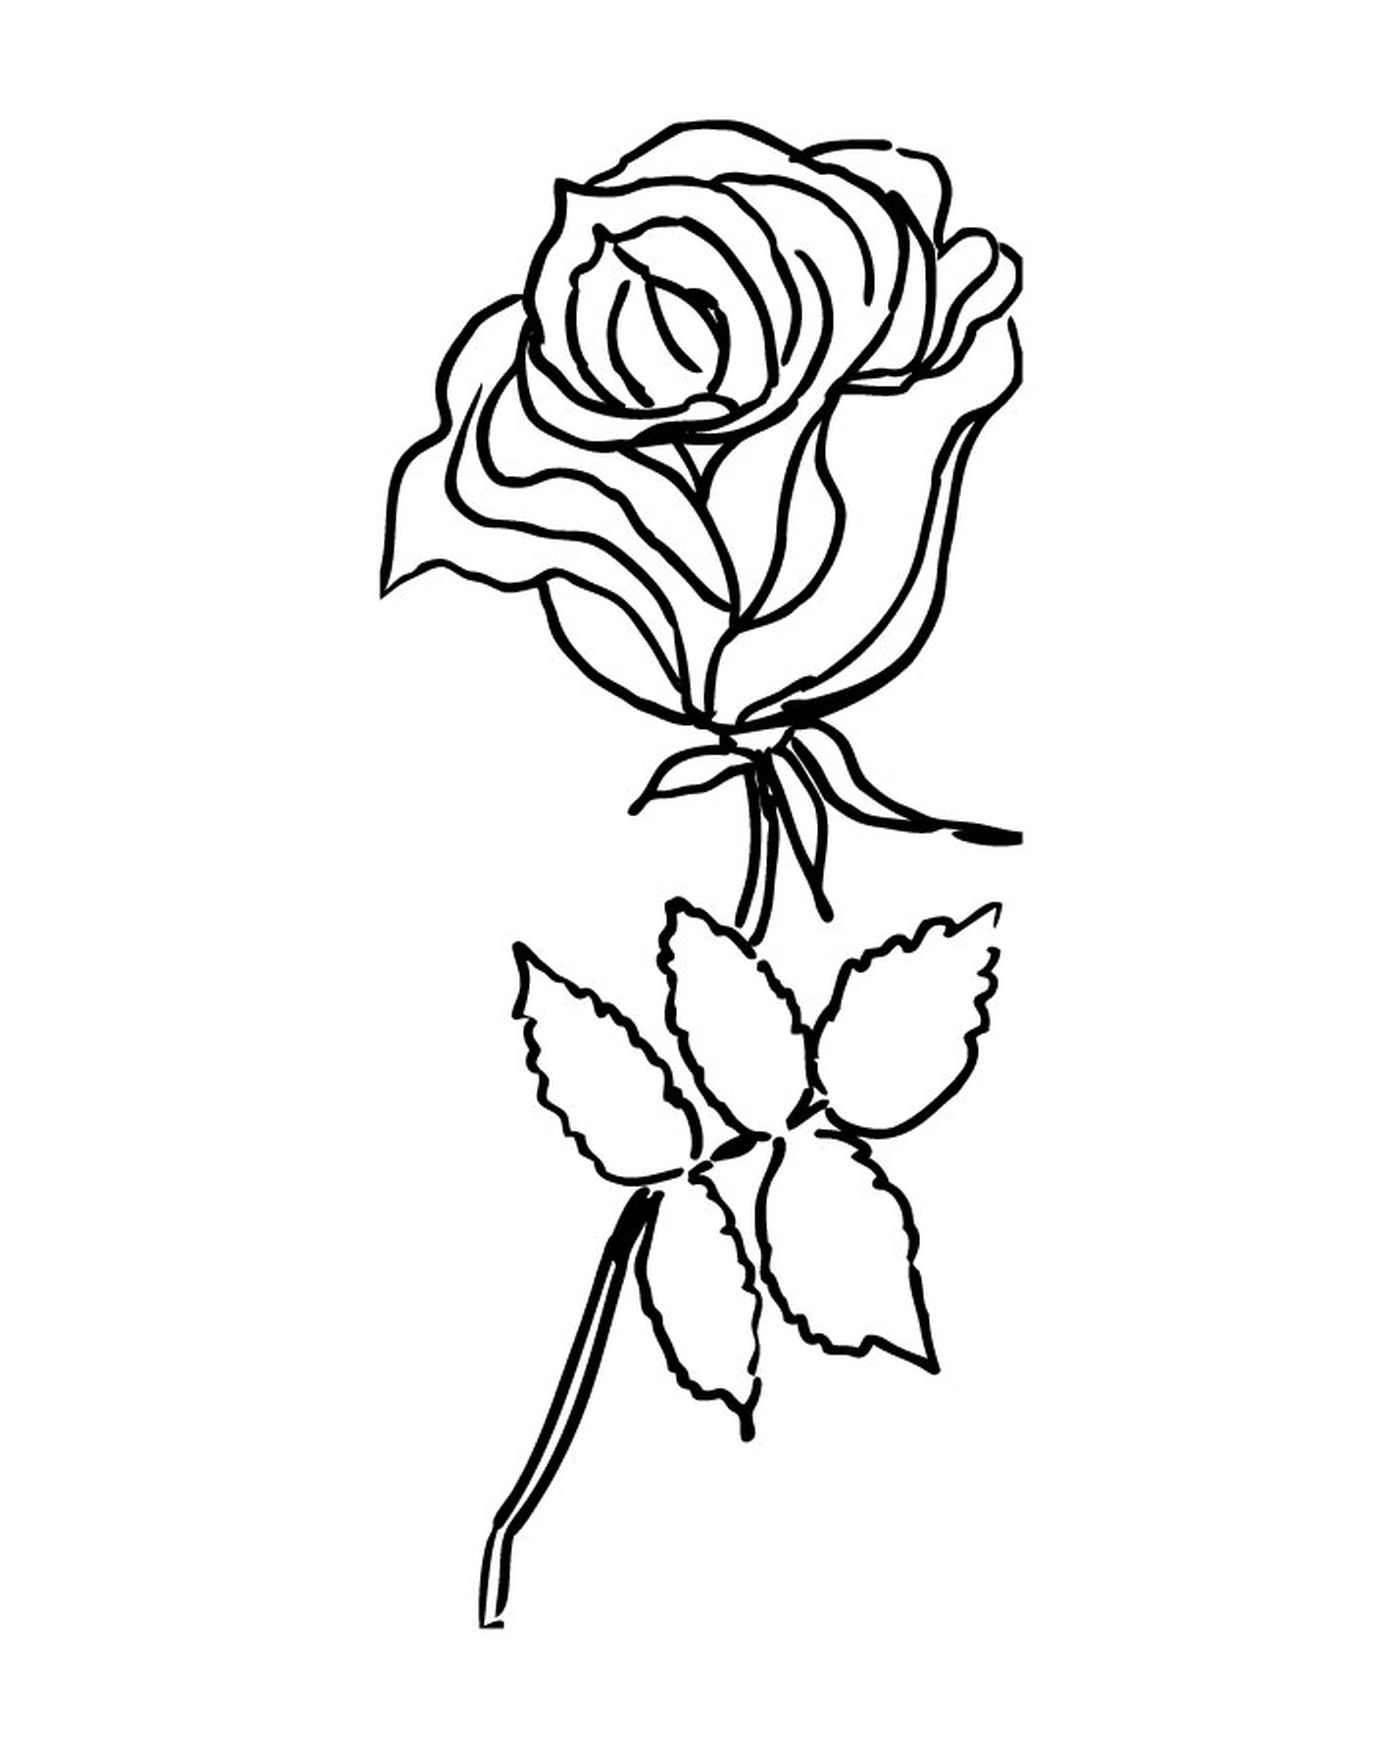  Simple and elegant rose 